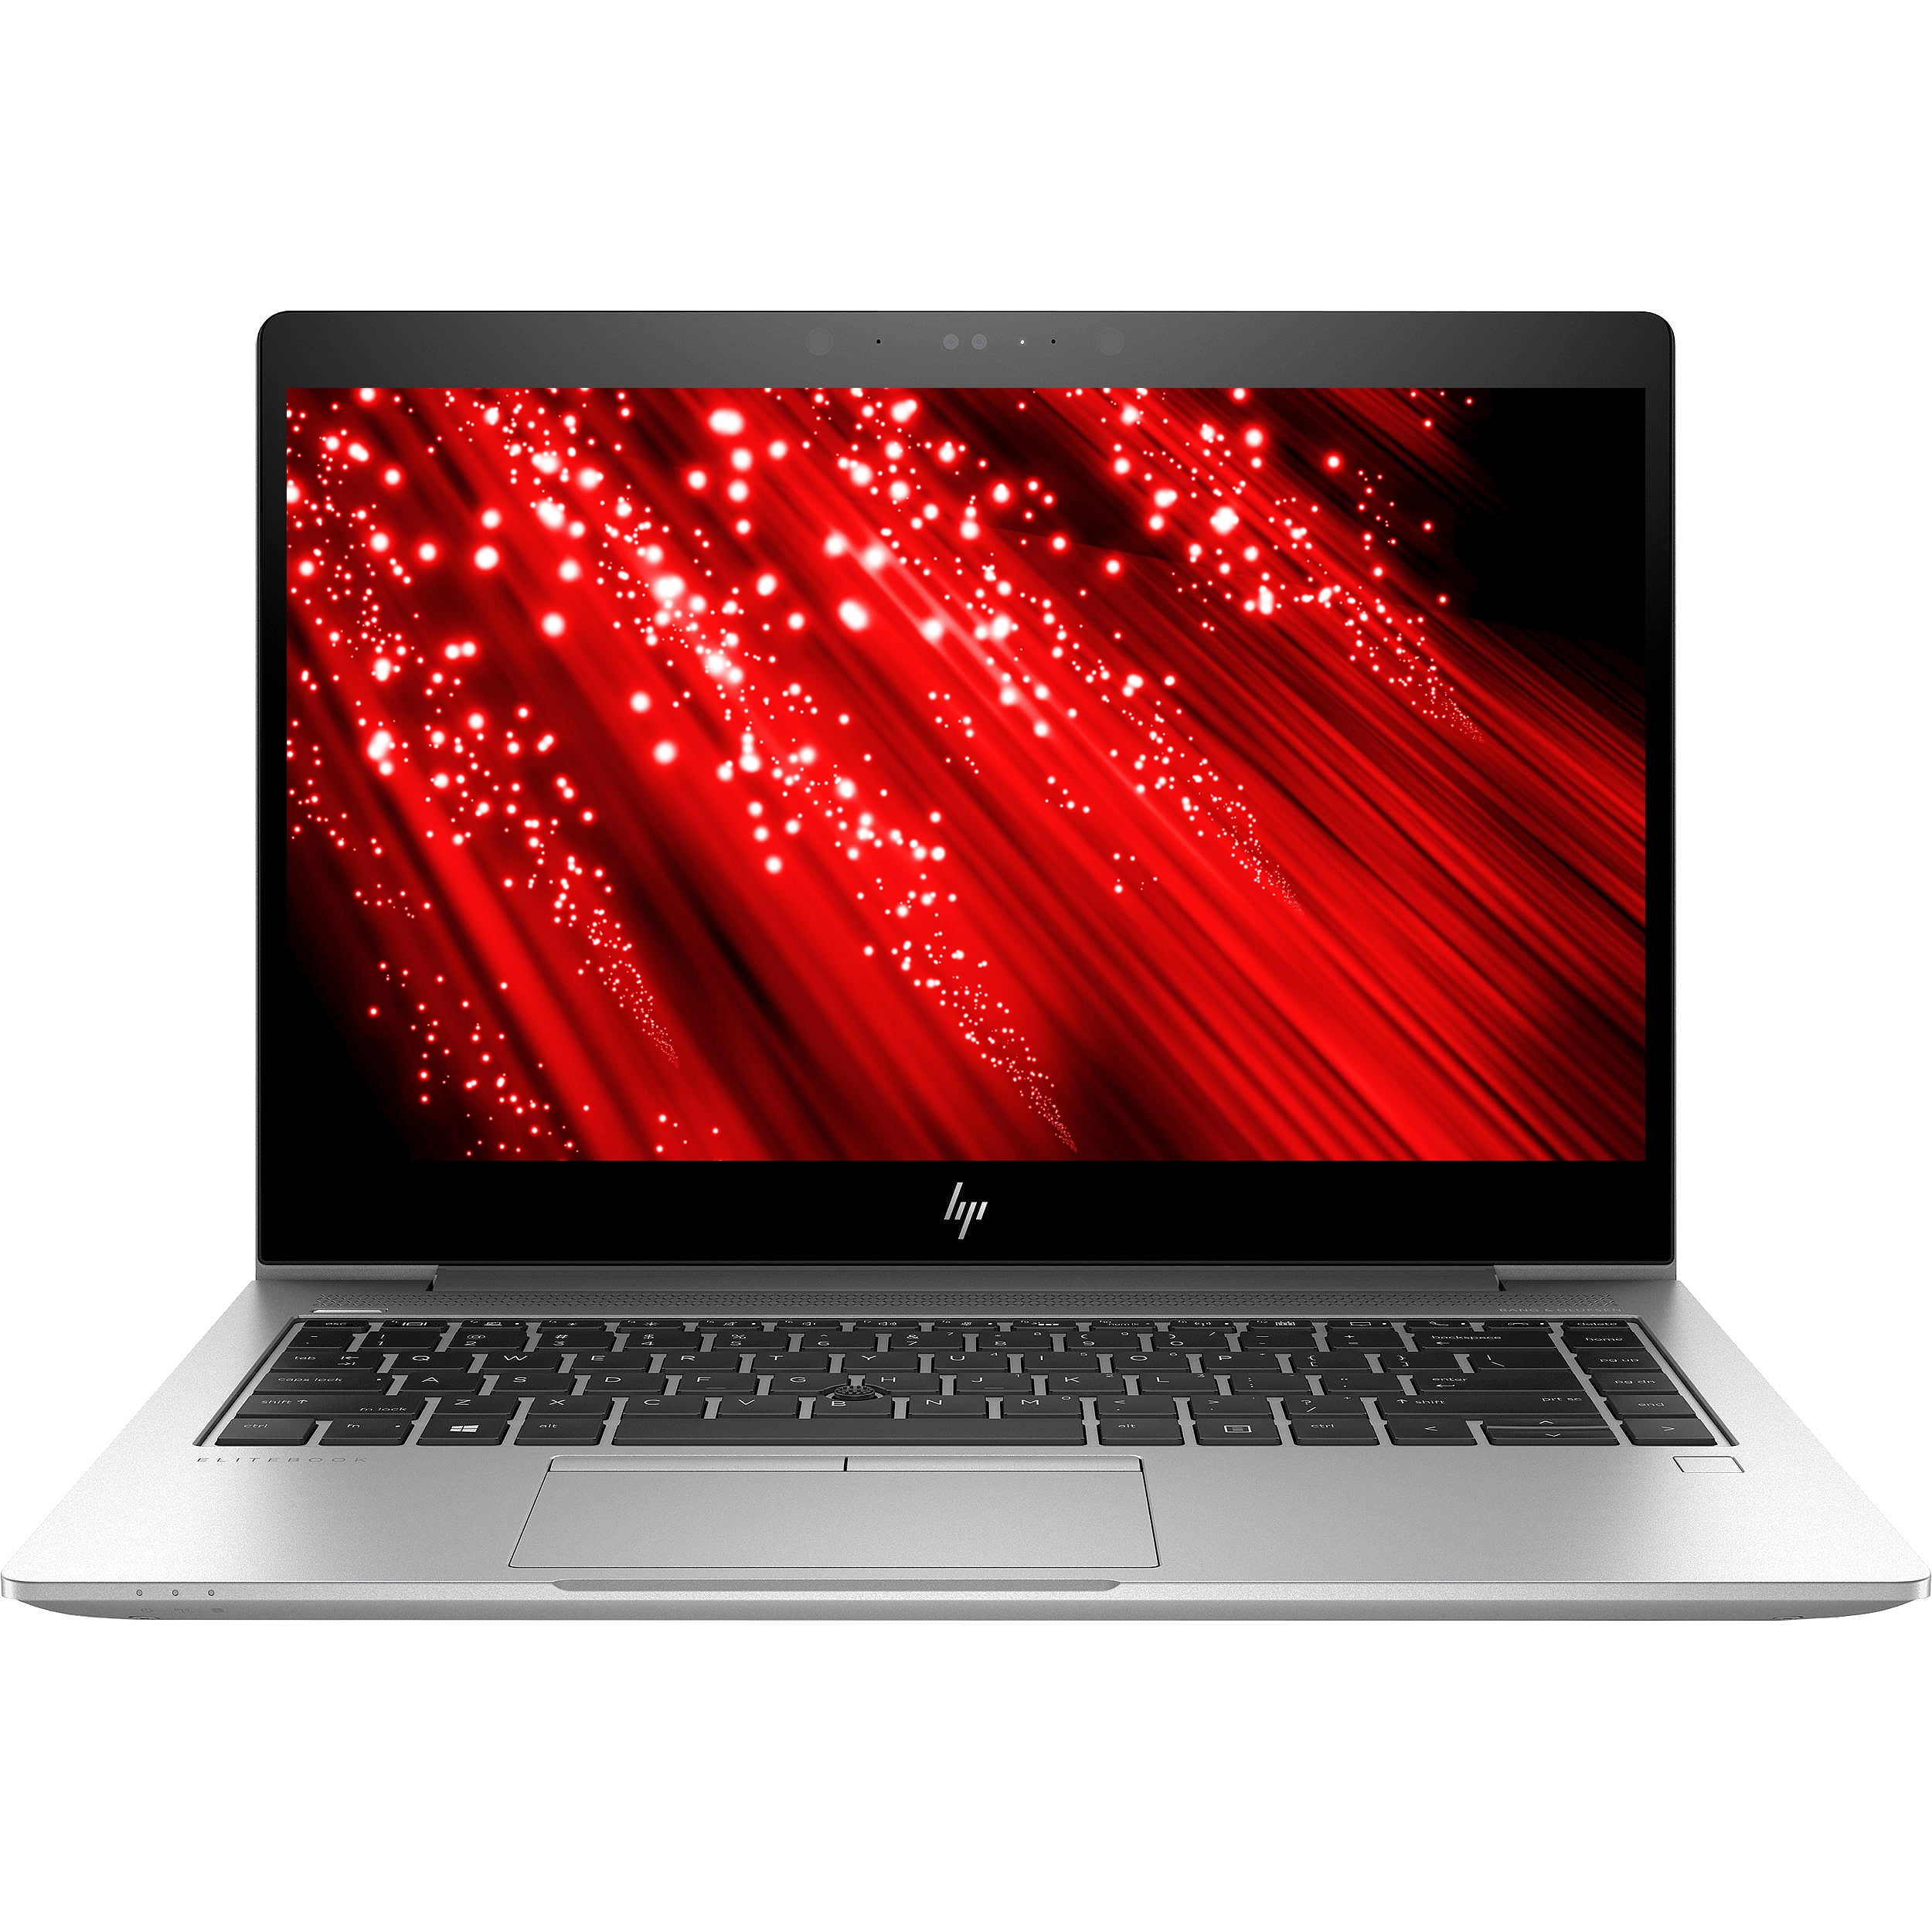 HP EliteBook 840 G5, 14 FHD Display, Intel Core i5-8350U Up to